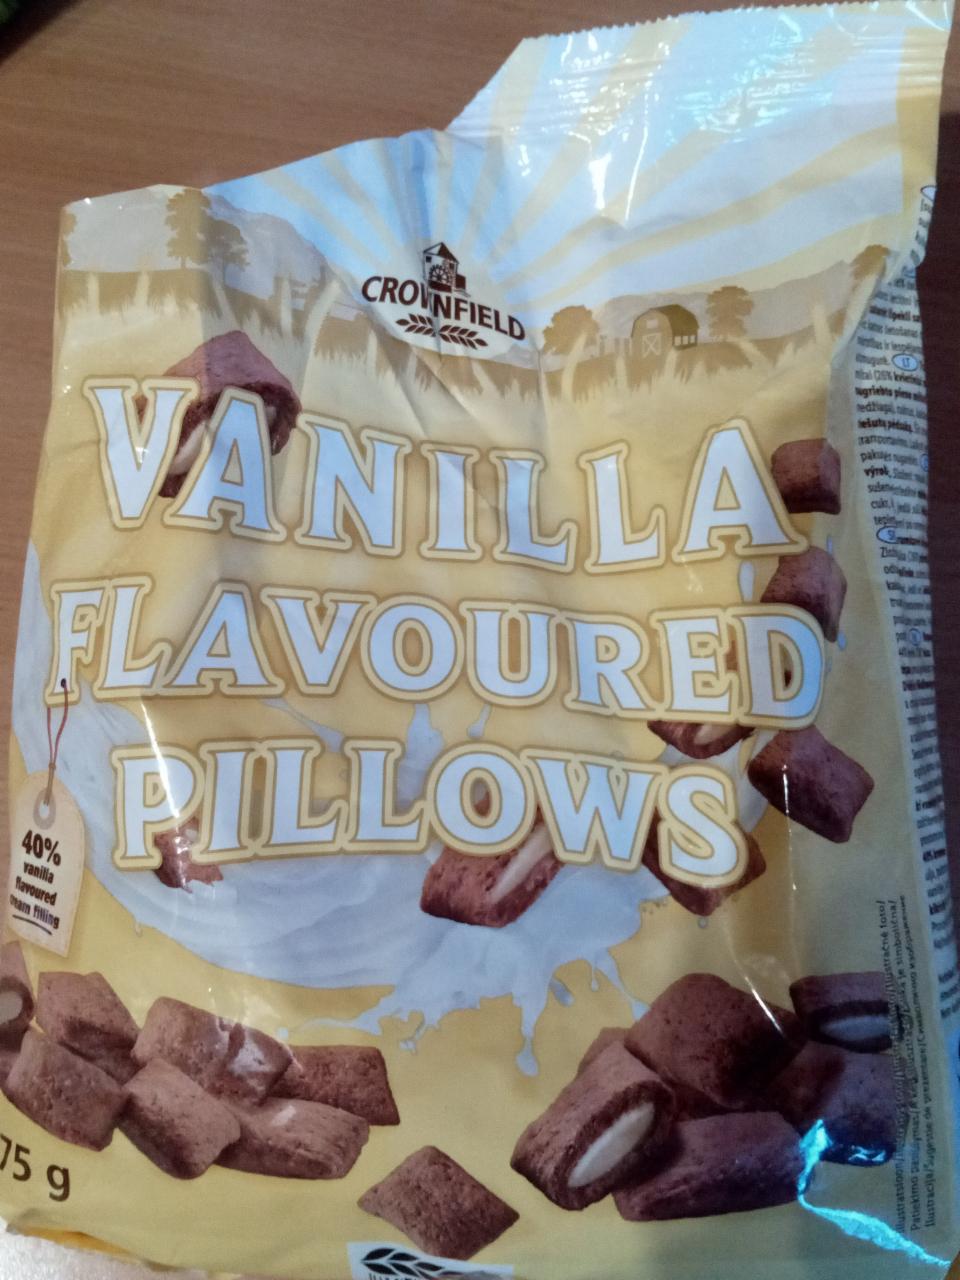 Képek - Vanilla flavoured pillows Crownfield